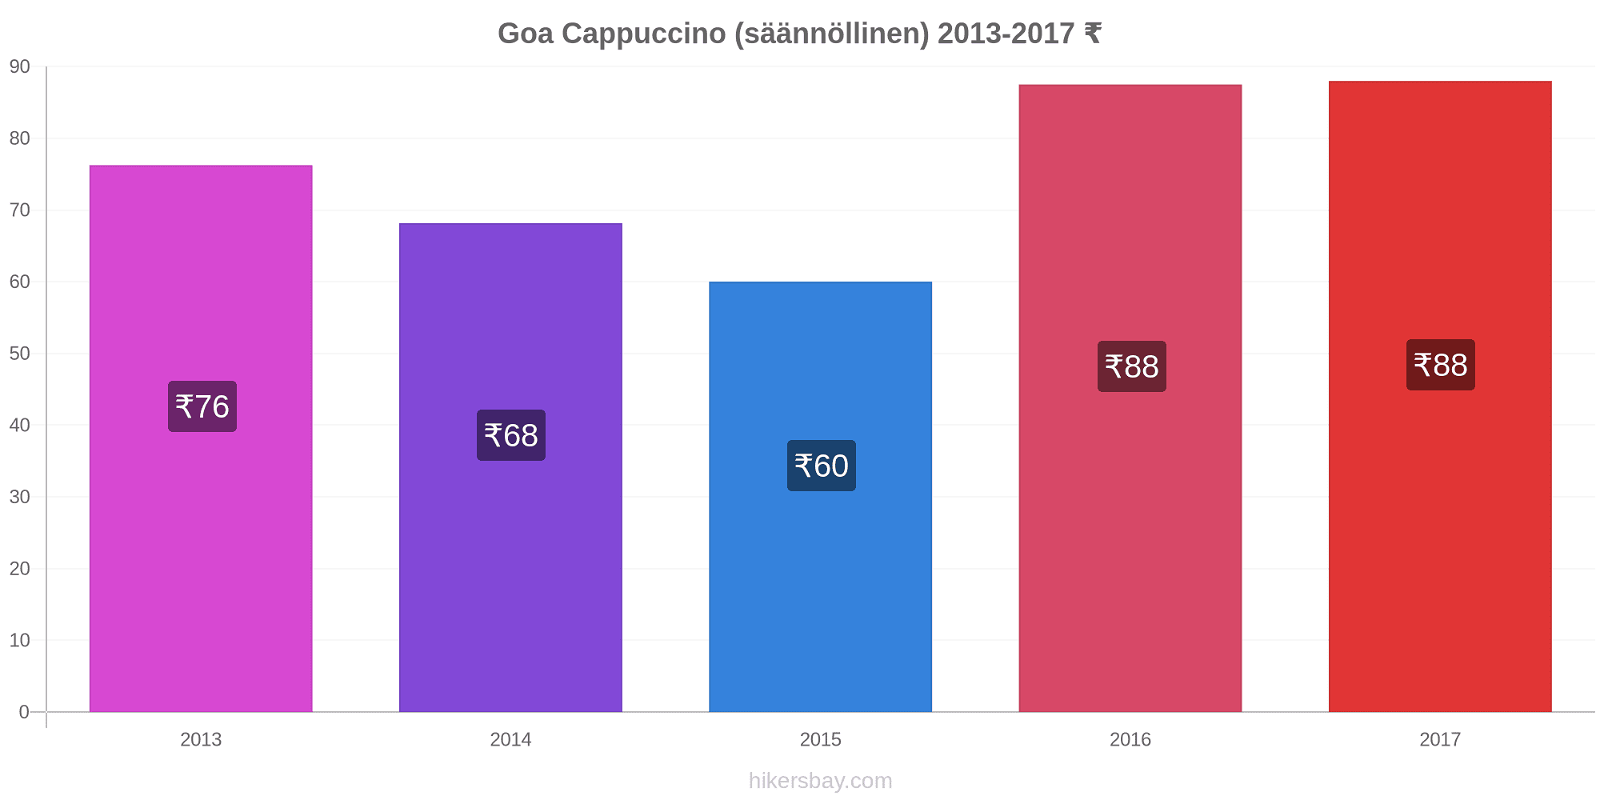 Goa hintojen muutokset Cappuccino (säännöllinen) hikersbay.com